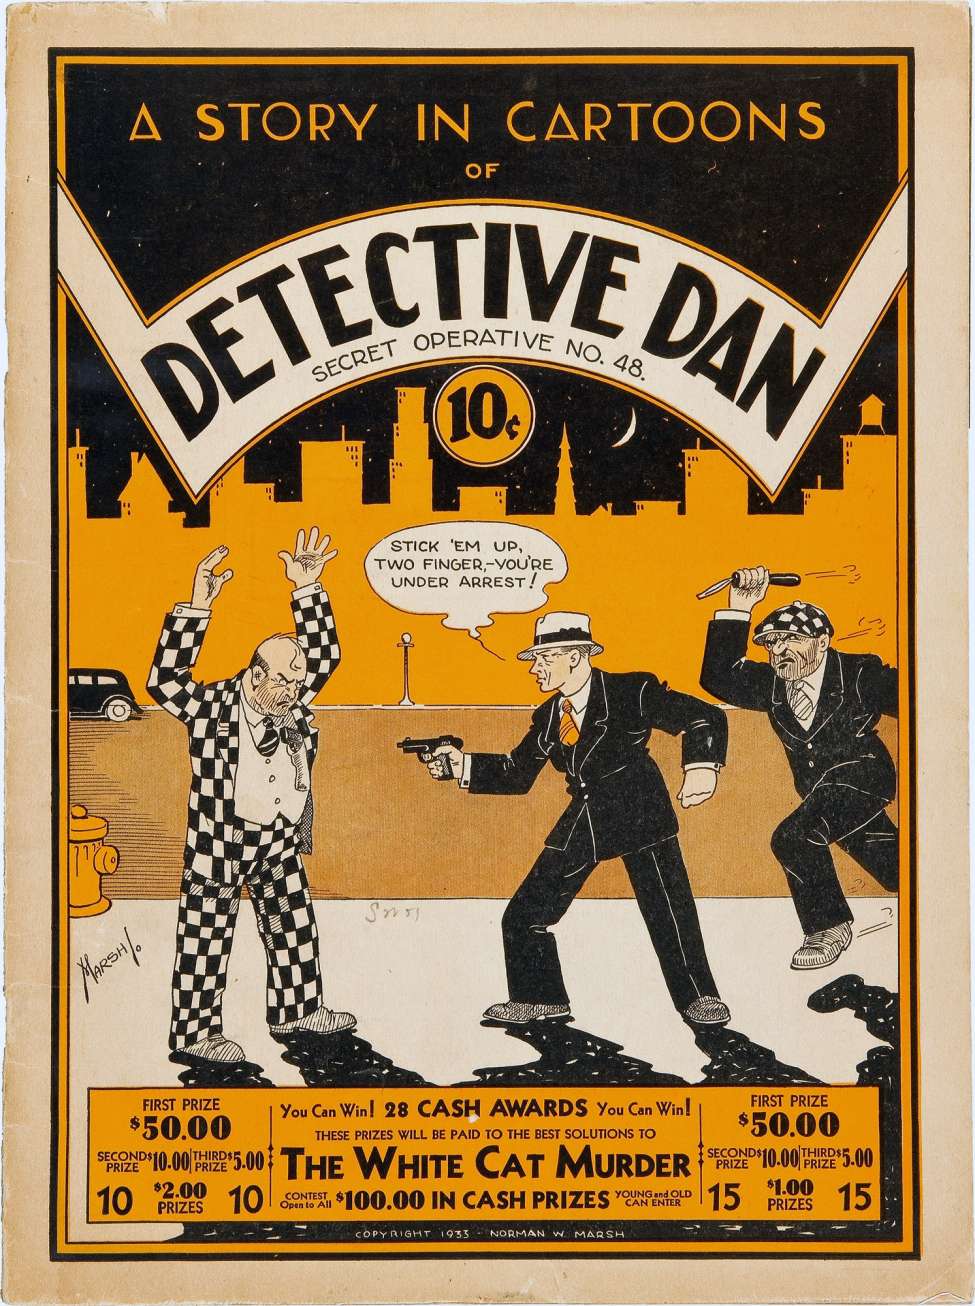 Comic Book Cover For Detective Dan, Secret Operative No. 48